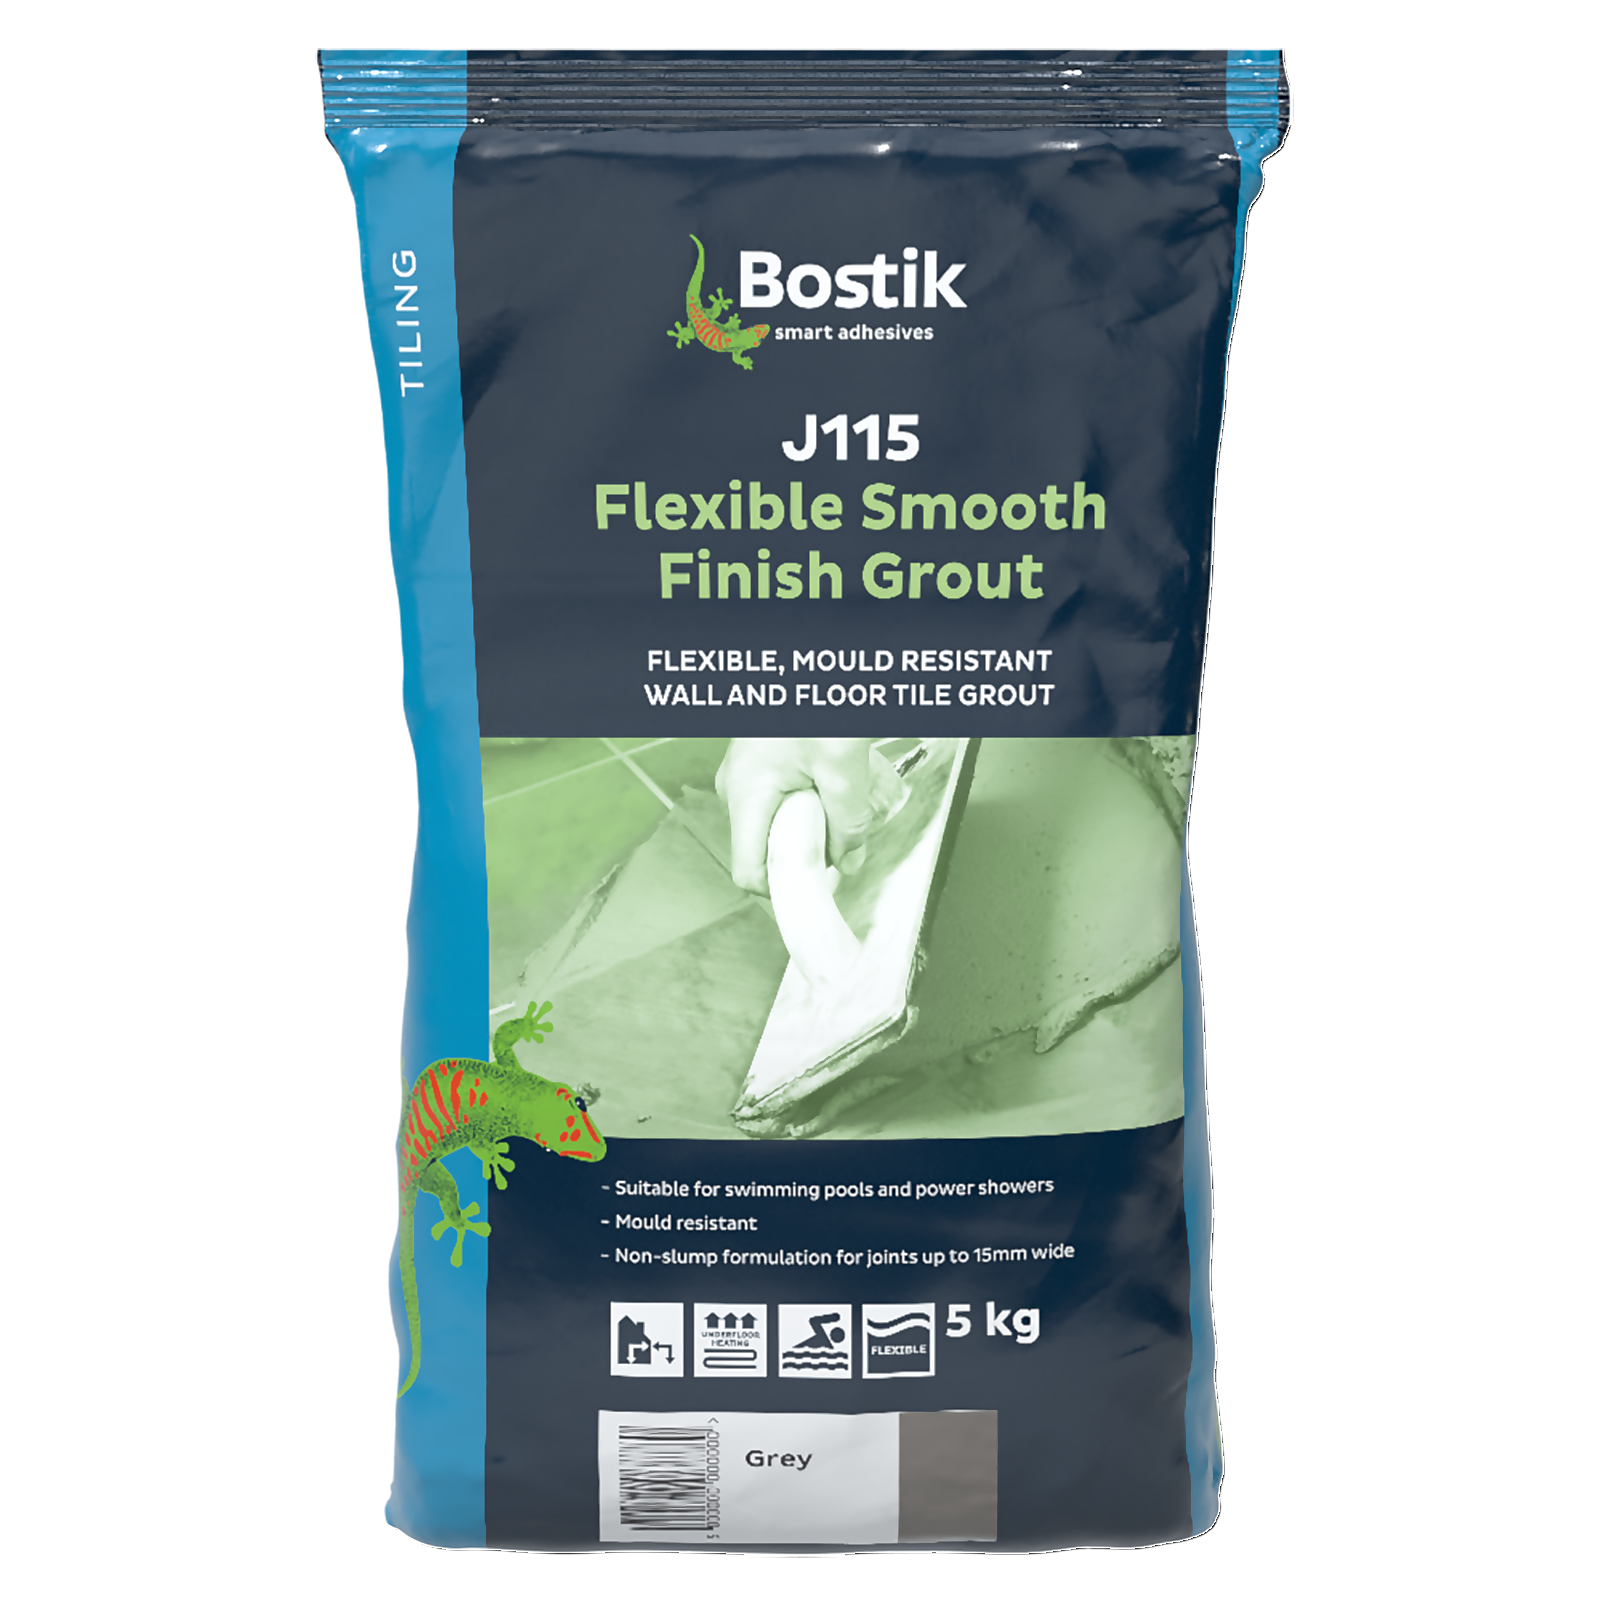 Photo of Bostik J115 Flexible Smooth Finish Tile Grout 5kg - Grey